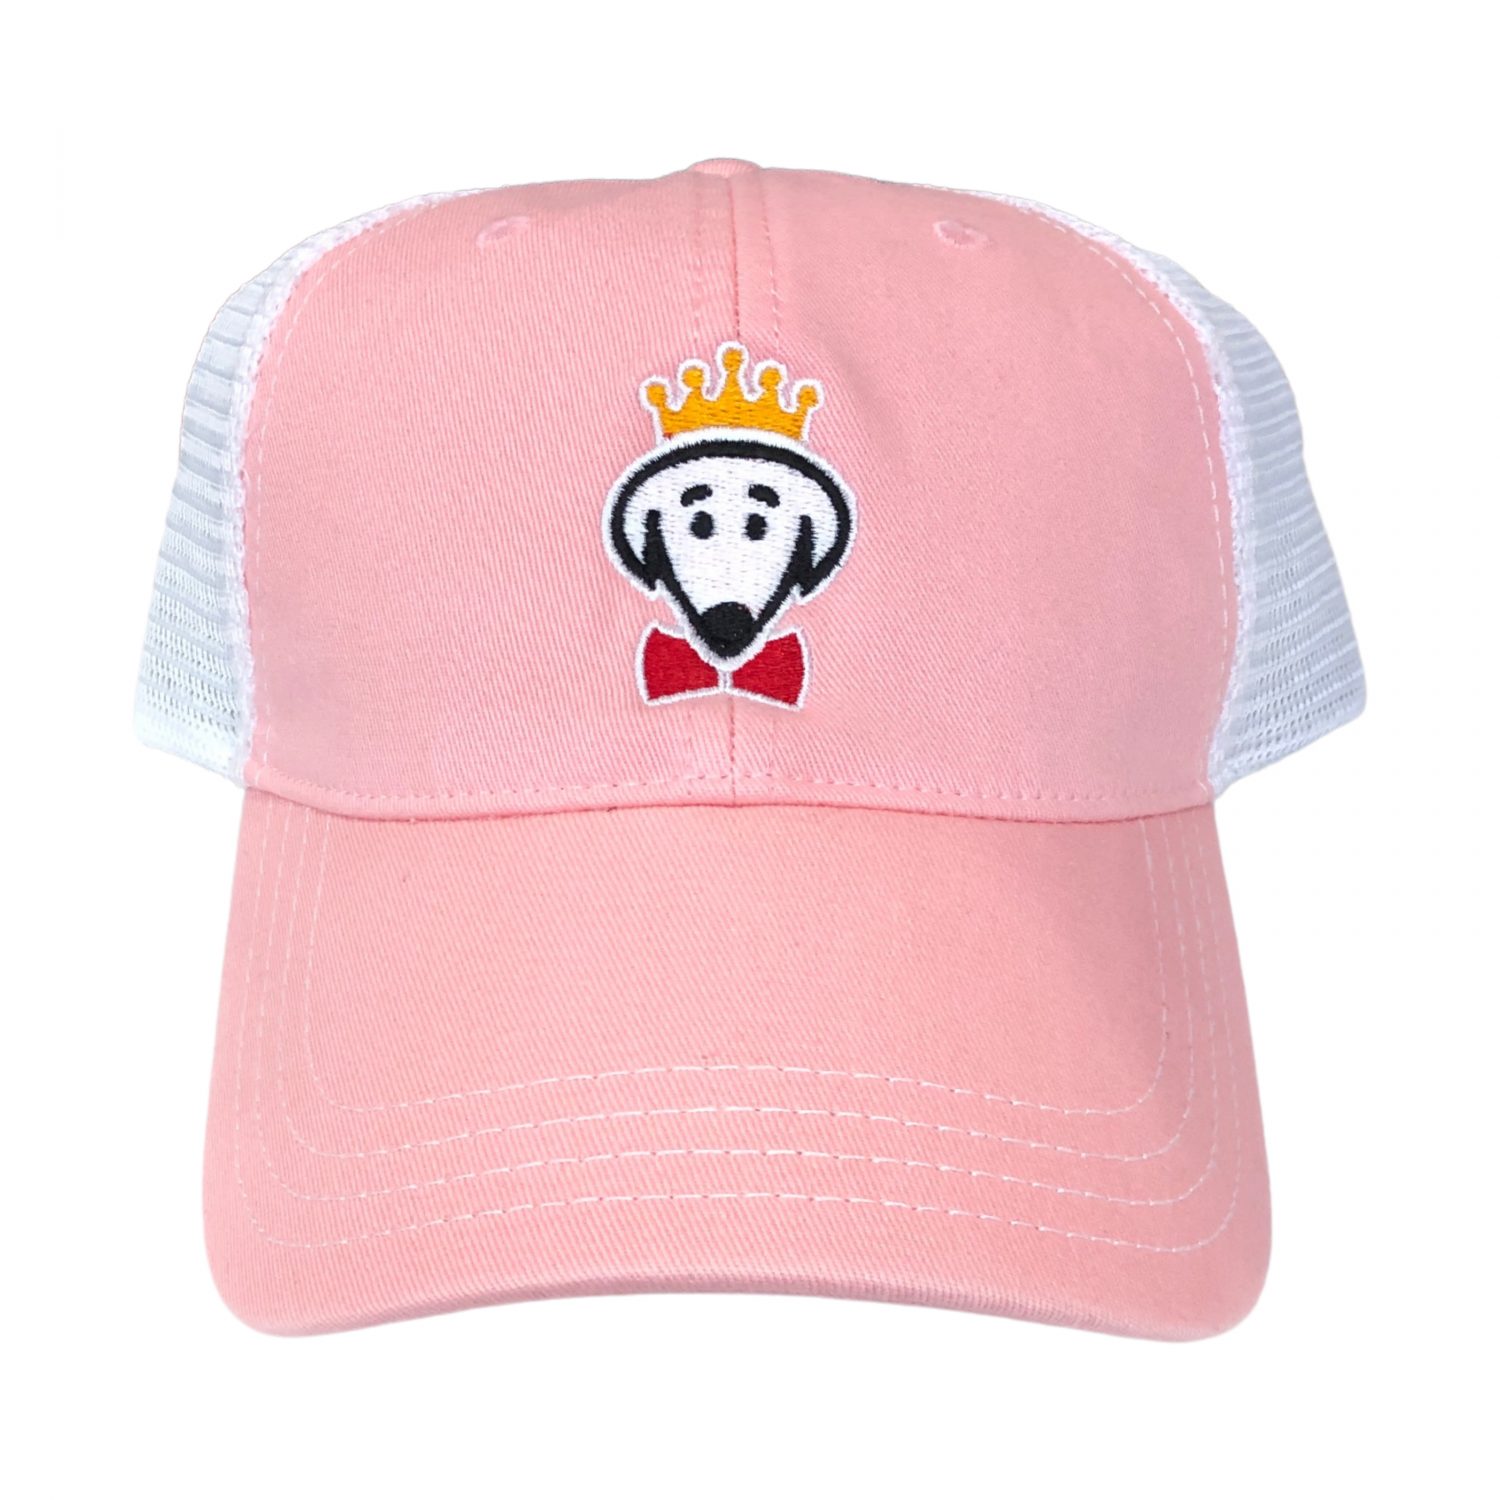 Beau Tyler crown baseball hat pink